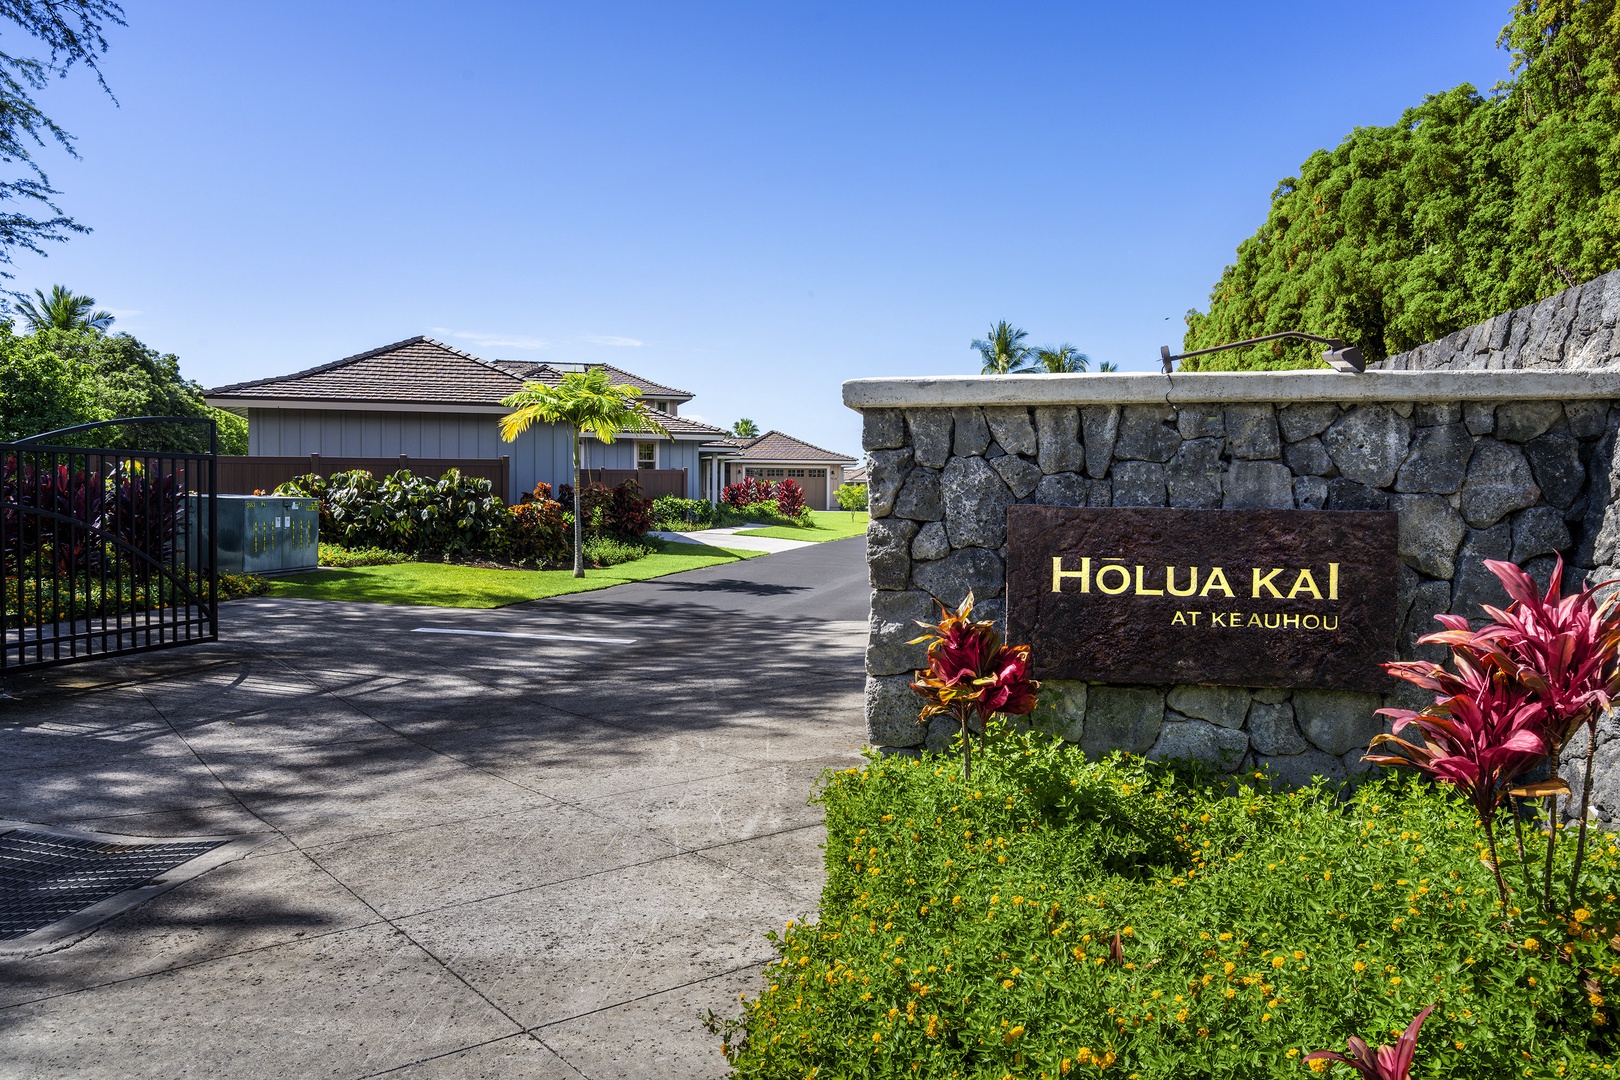 Kailua Kona Vacation Rentals, Holua Kai #9 - Holua Kai Complex entry gate